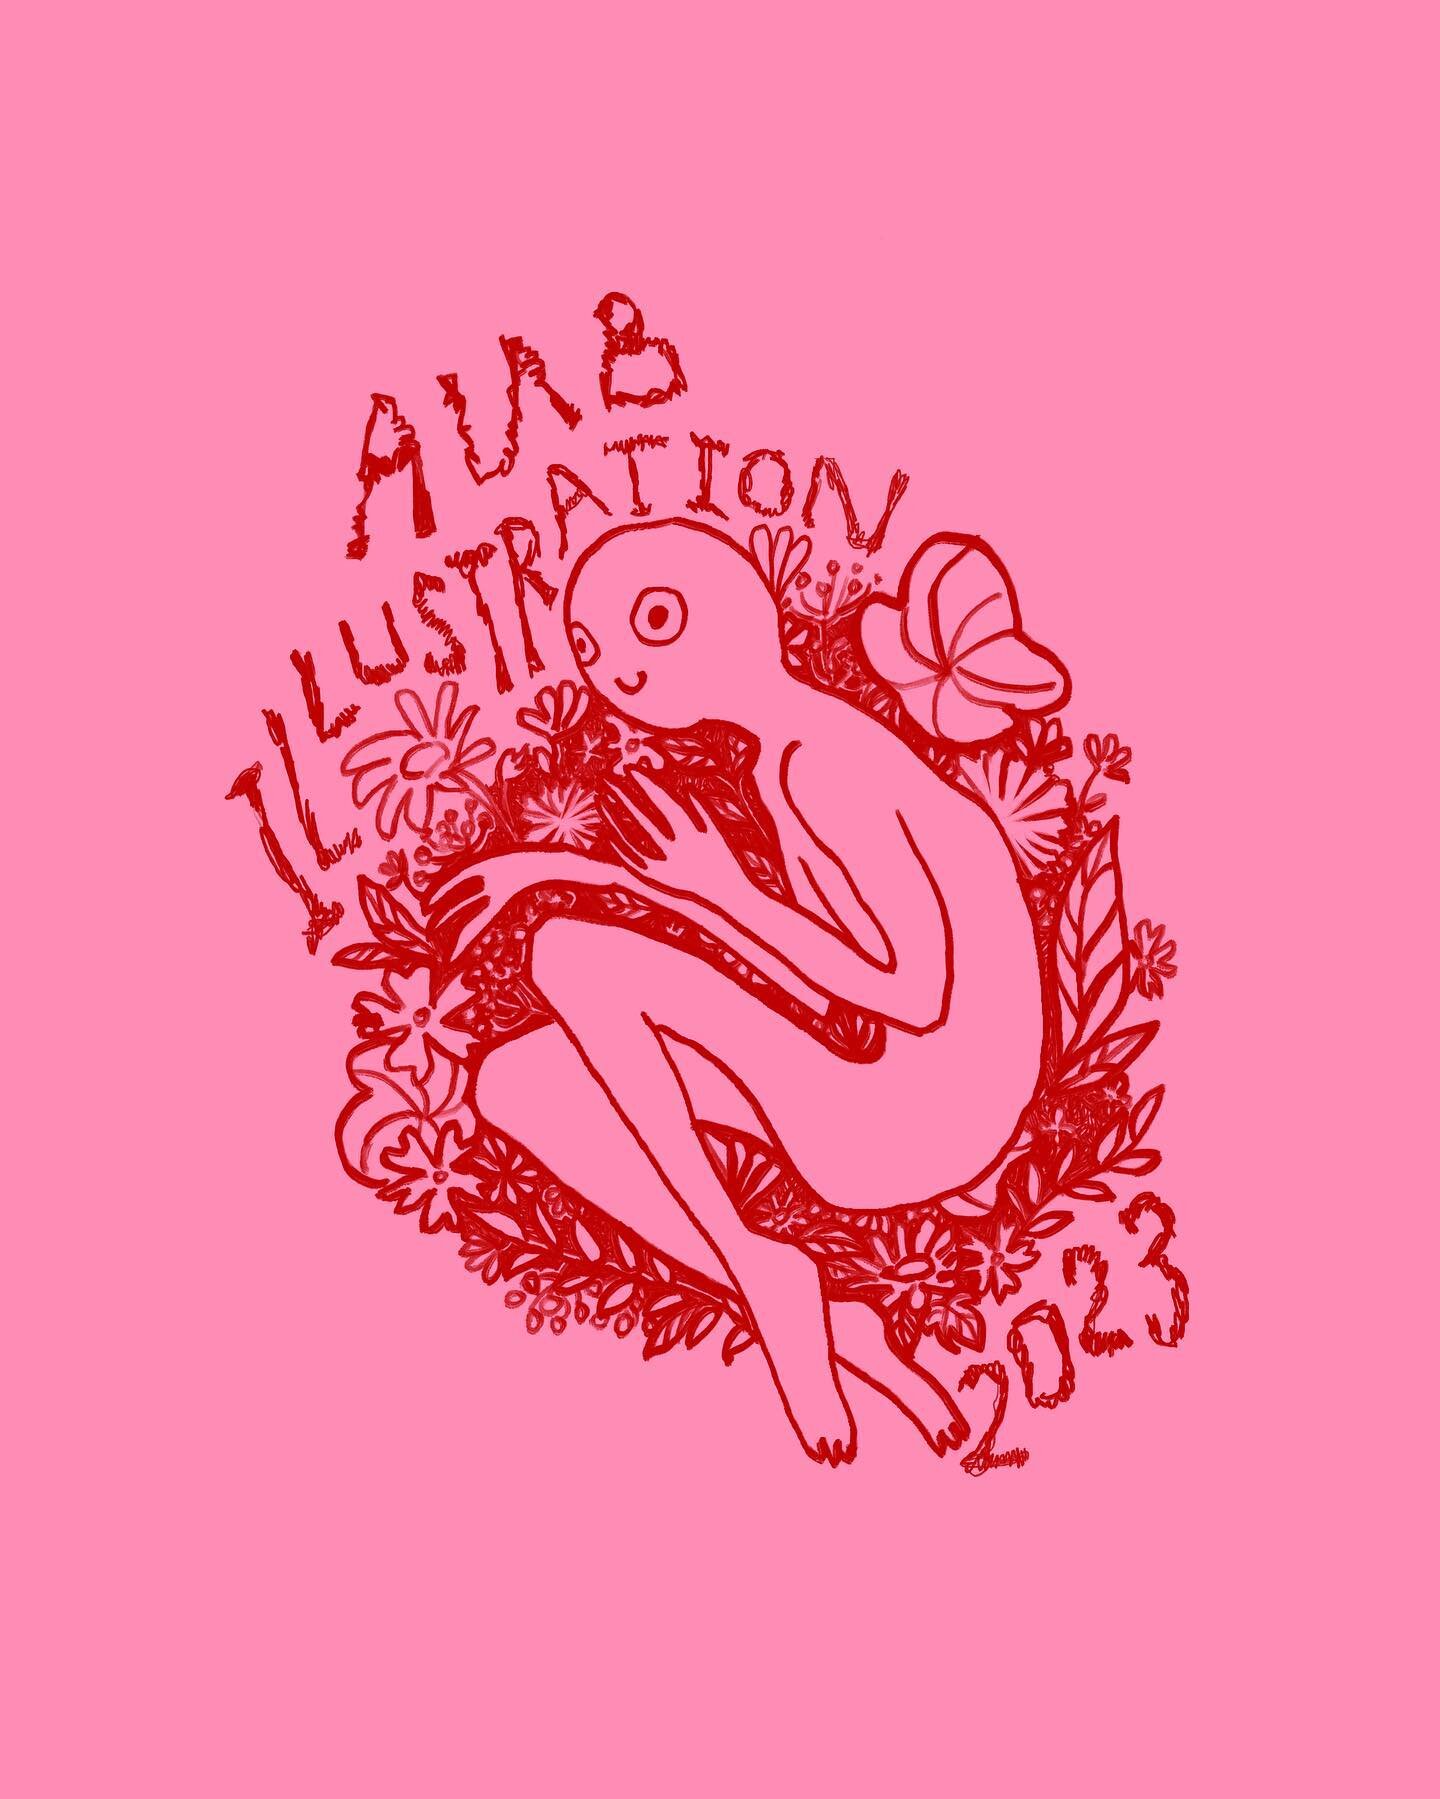 🌸my design for the annual illustration bag/branding🌸
.
#aubill6#aubillustration#illustration#illustrator#digitalart#digitalartist#design#pinkandred#aub#funny#art#artist